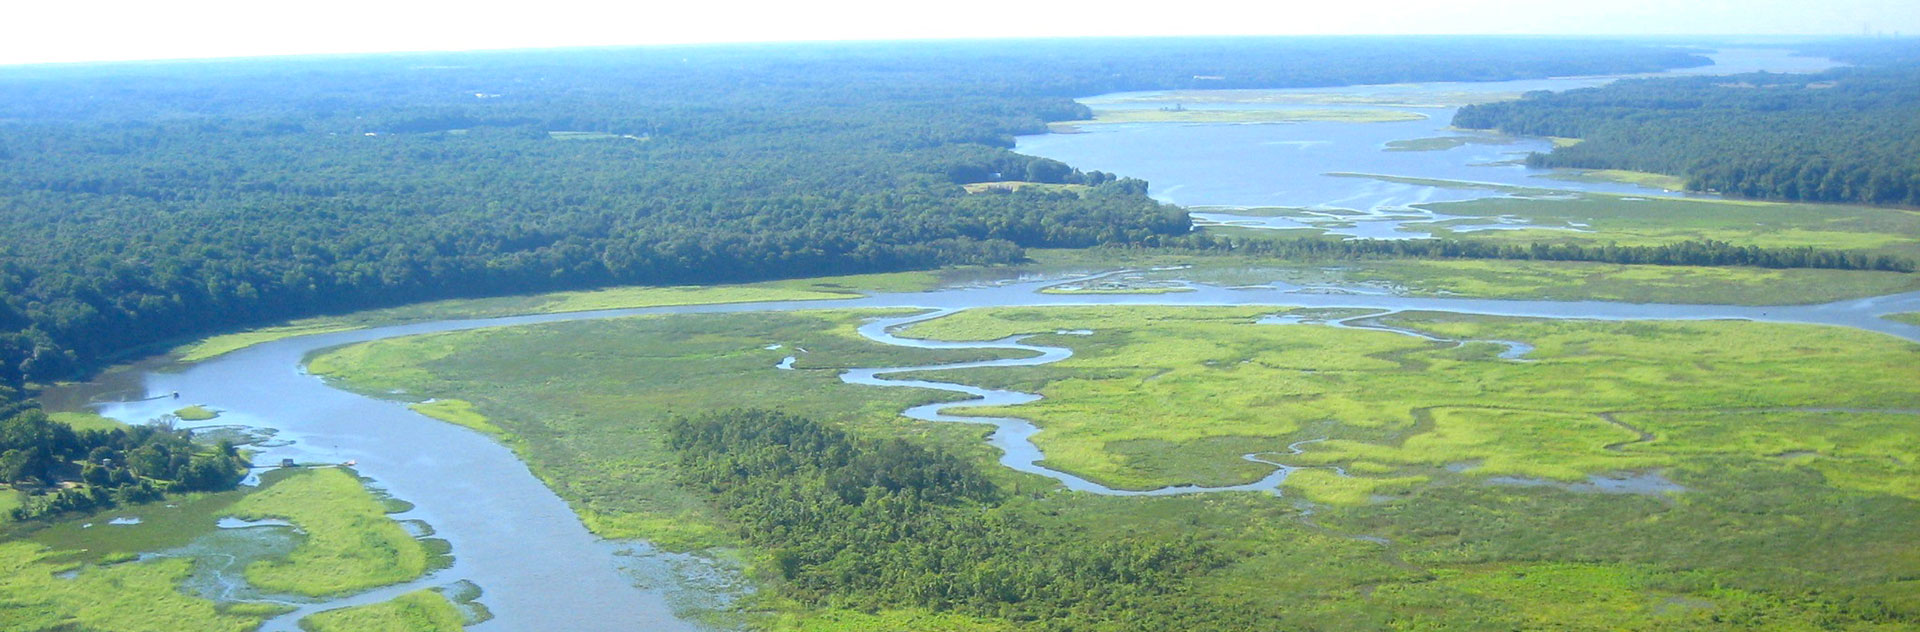 Chesapeake Bay-Maryland National Estuarine Research Reserve